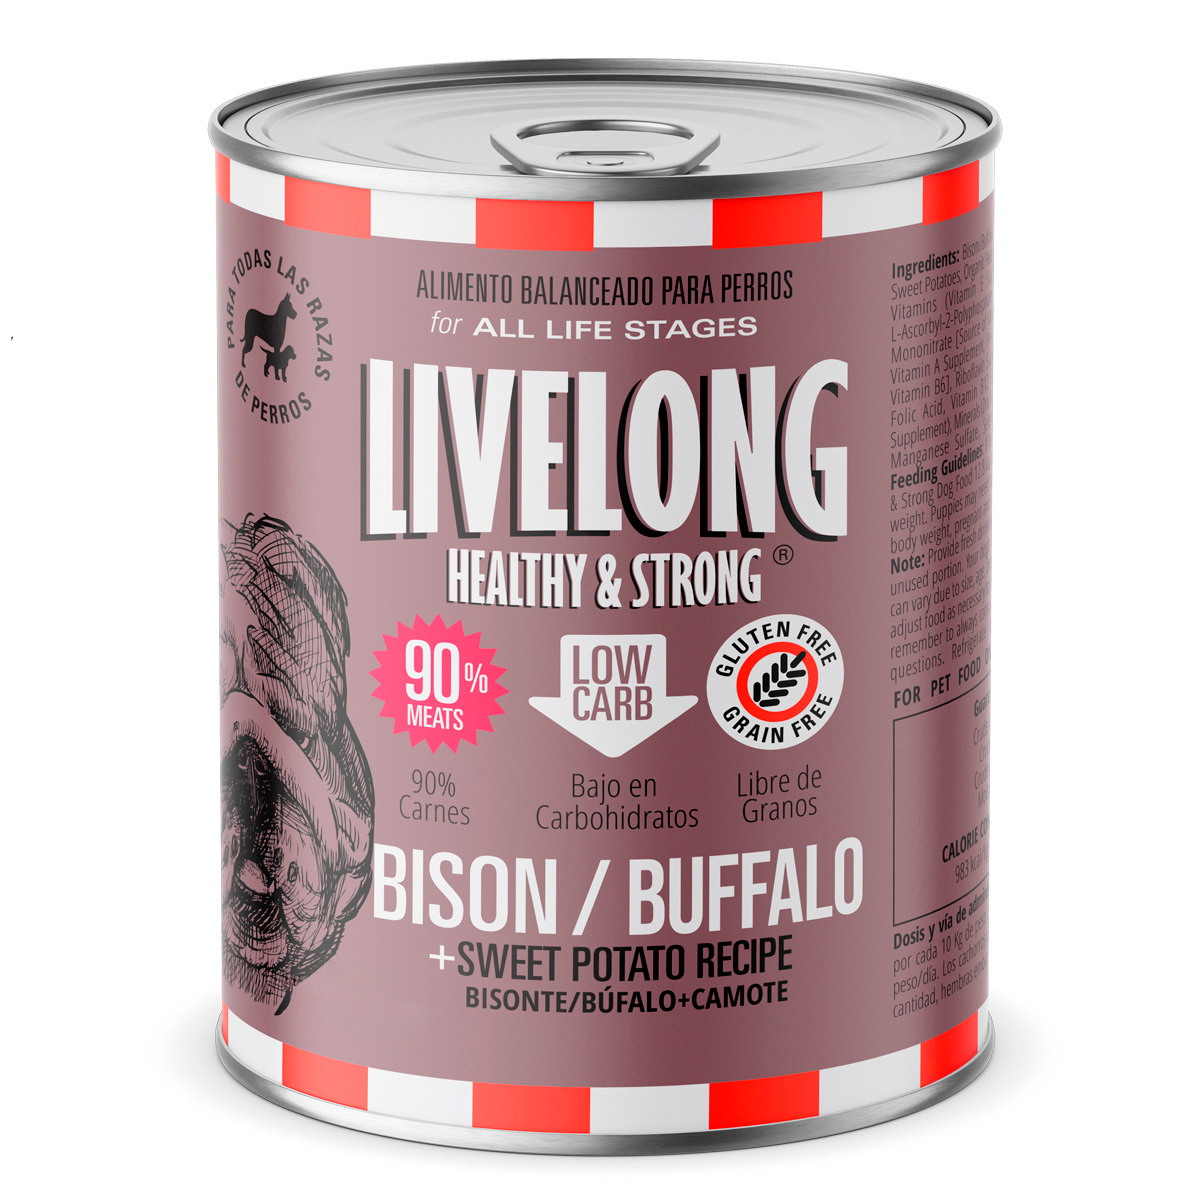 Livelong Healthy & Strong Alimento Natural Húmedo para Perro Todas las Edades Receta Bisonte/Camote, 354 g